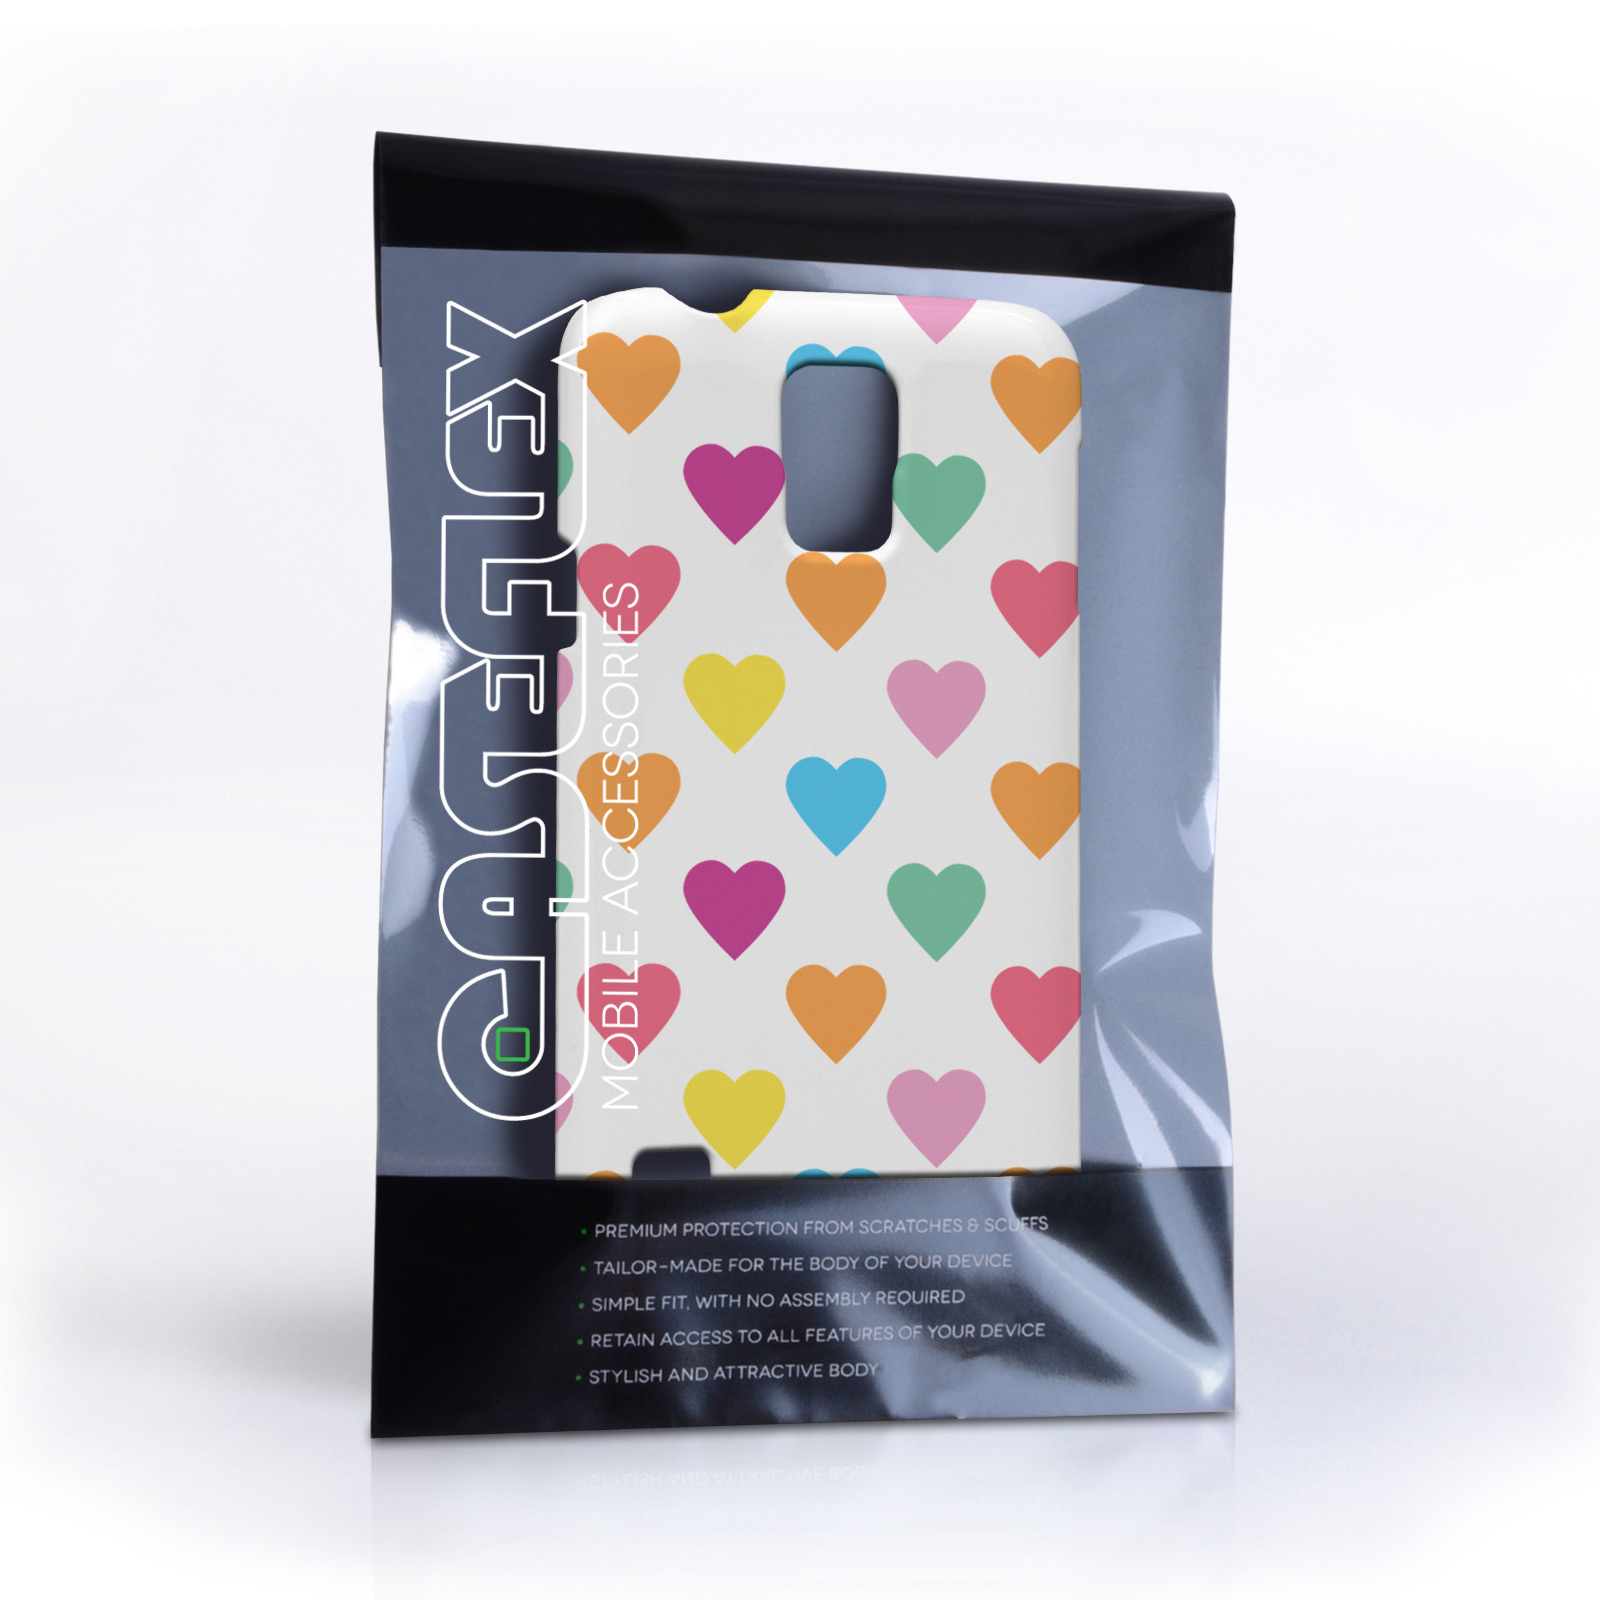 Caseflex Samsung Galaxy S5 Polka Hearts Pastel Case